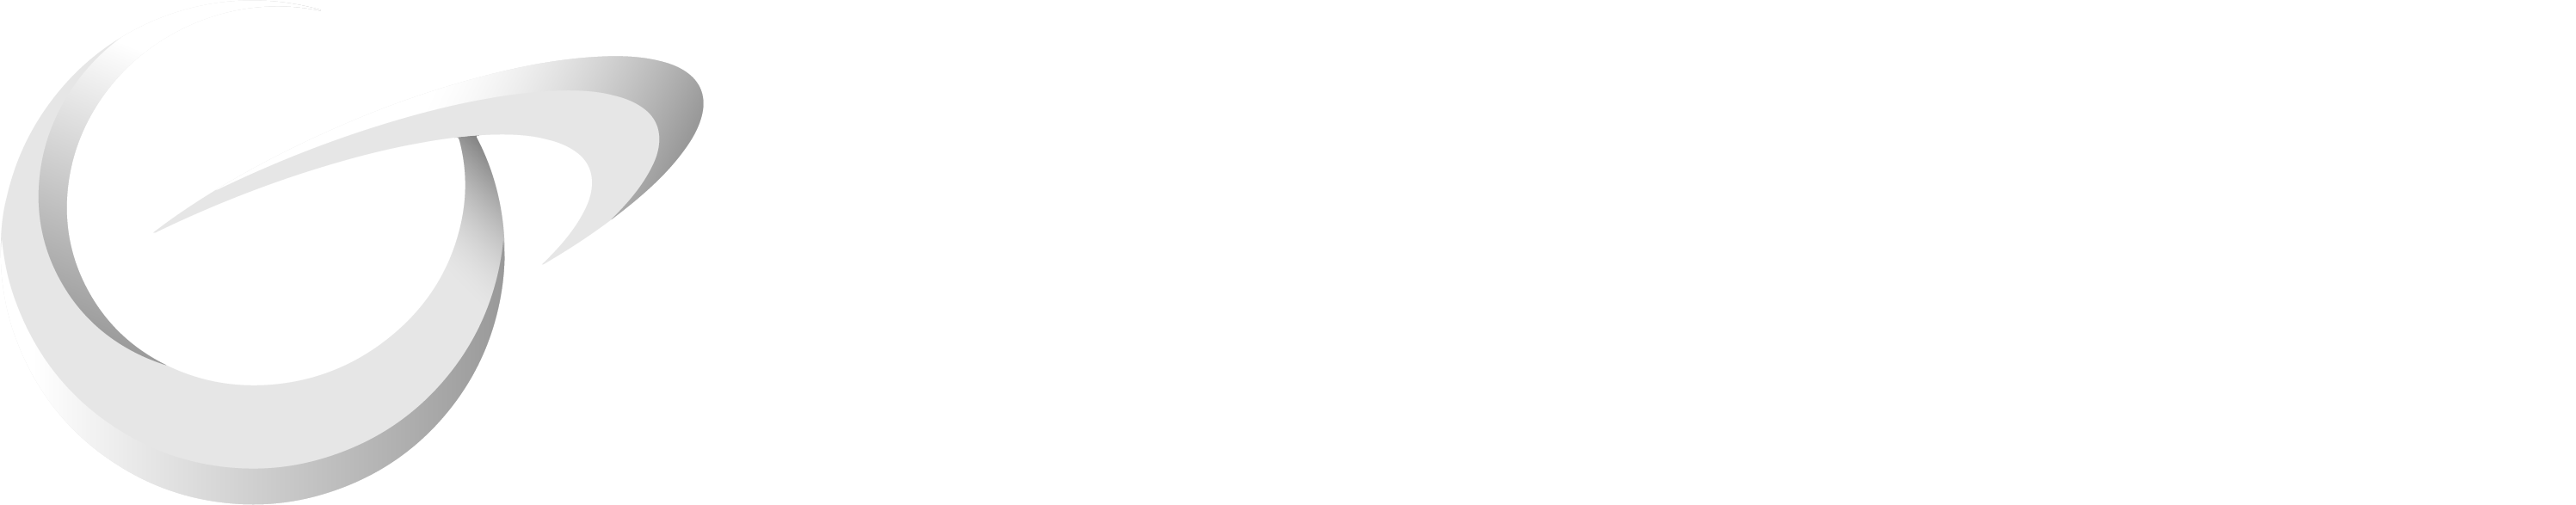 Global Electronic Technology logo